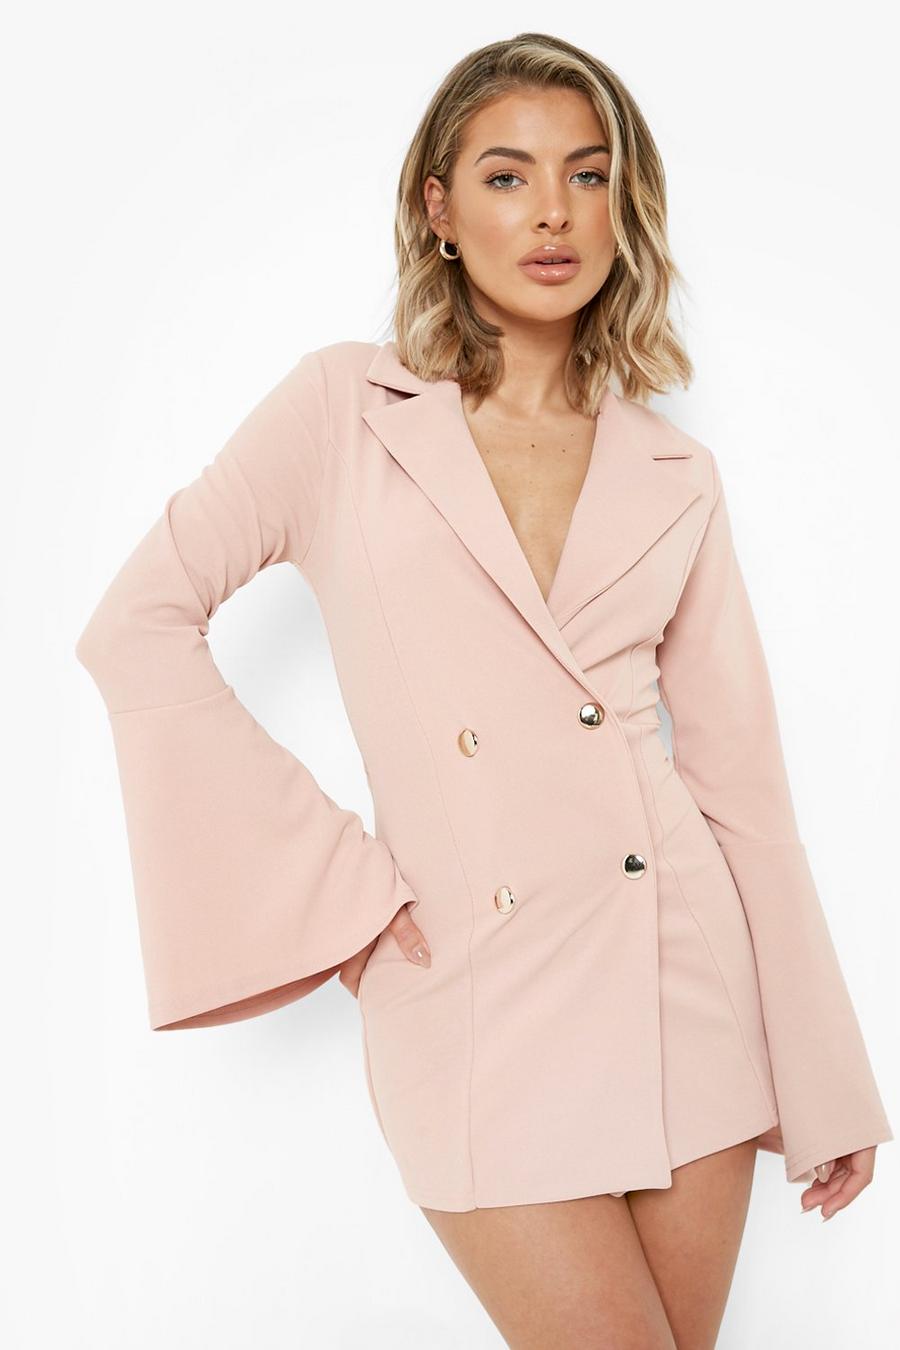 Soft pink Flare Sleeve Blazer Playsuit